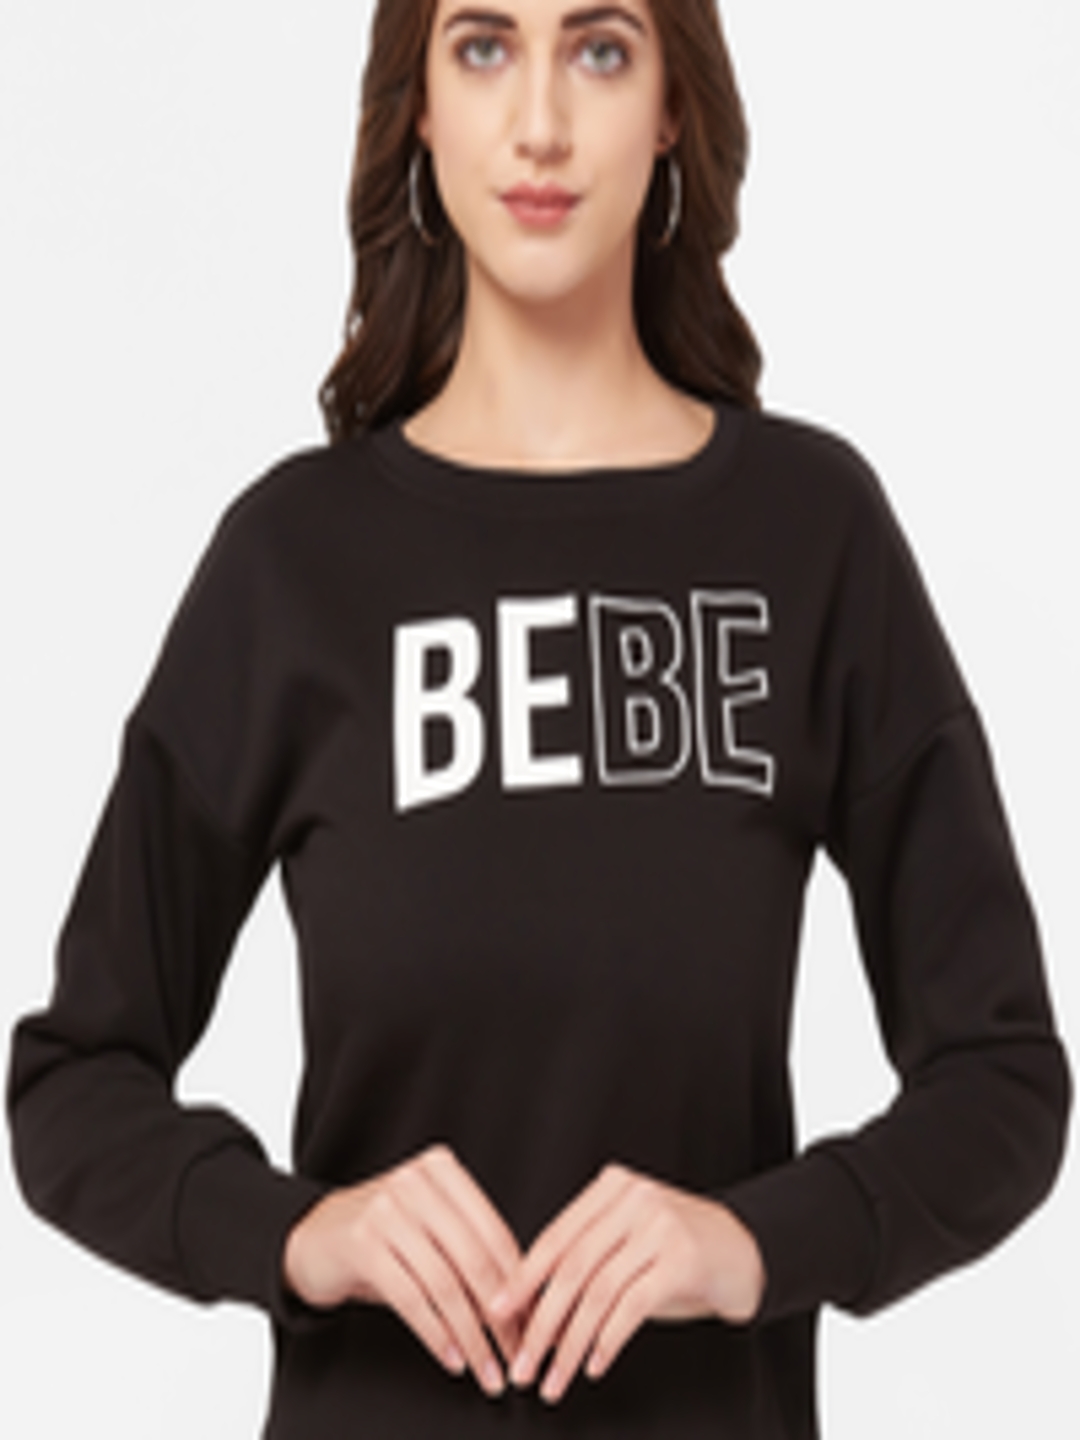 Buy Bebe Women Black Printed Sweatshirt - Sweatshirts for Women